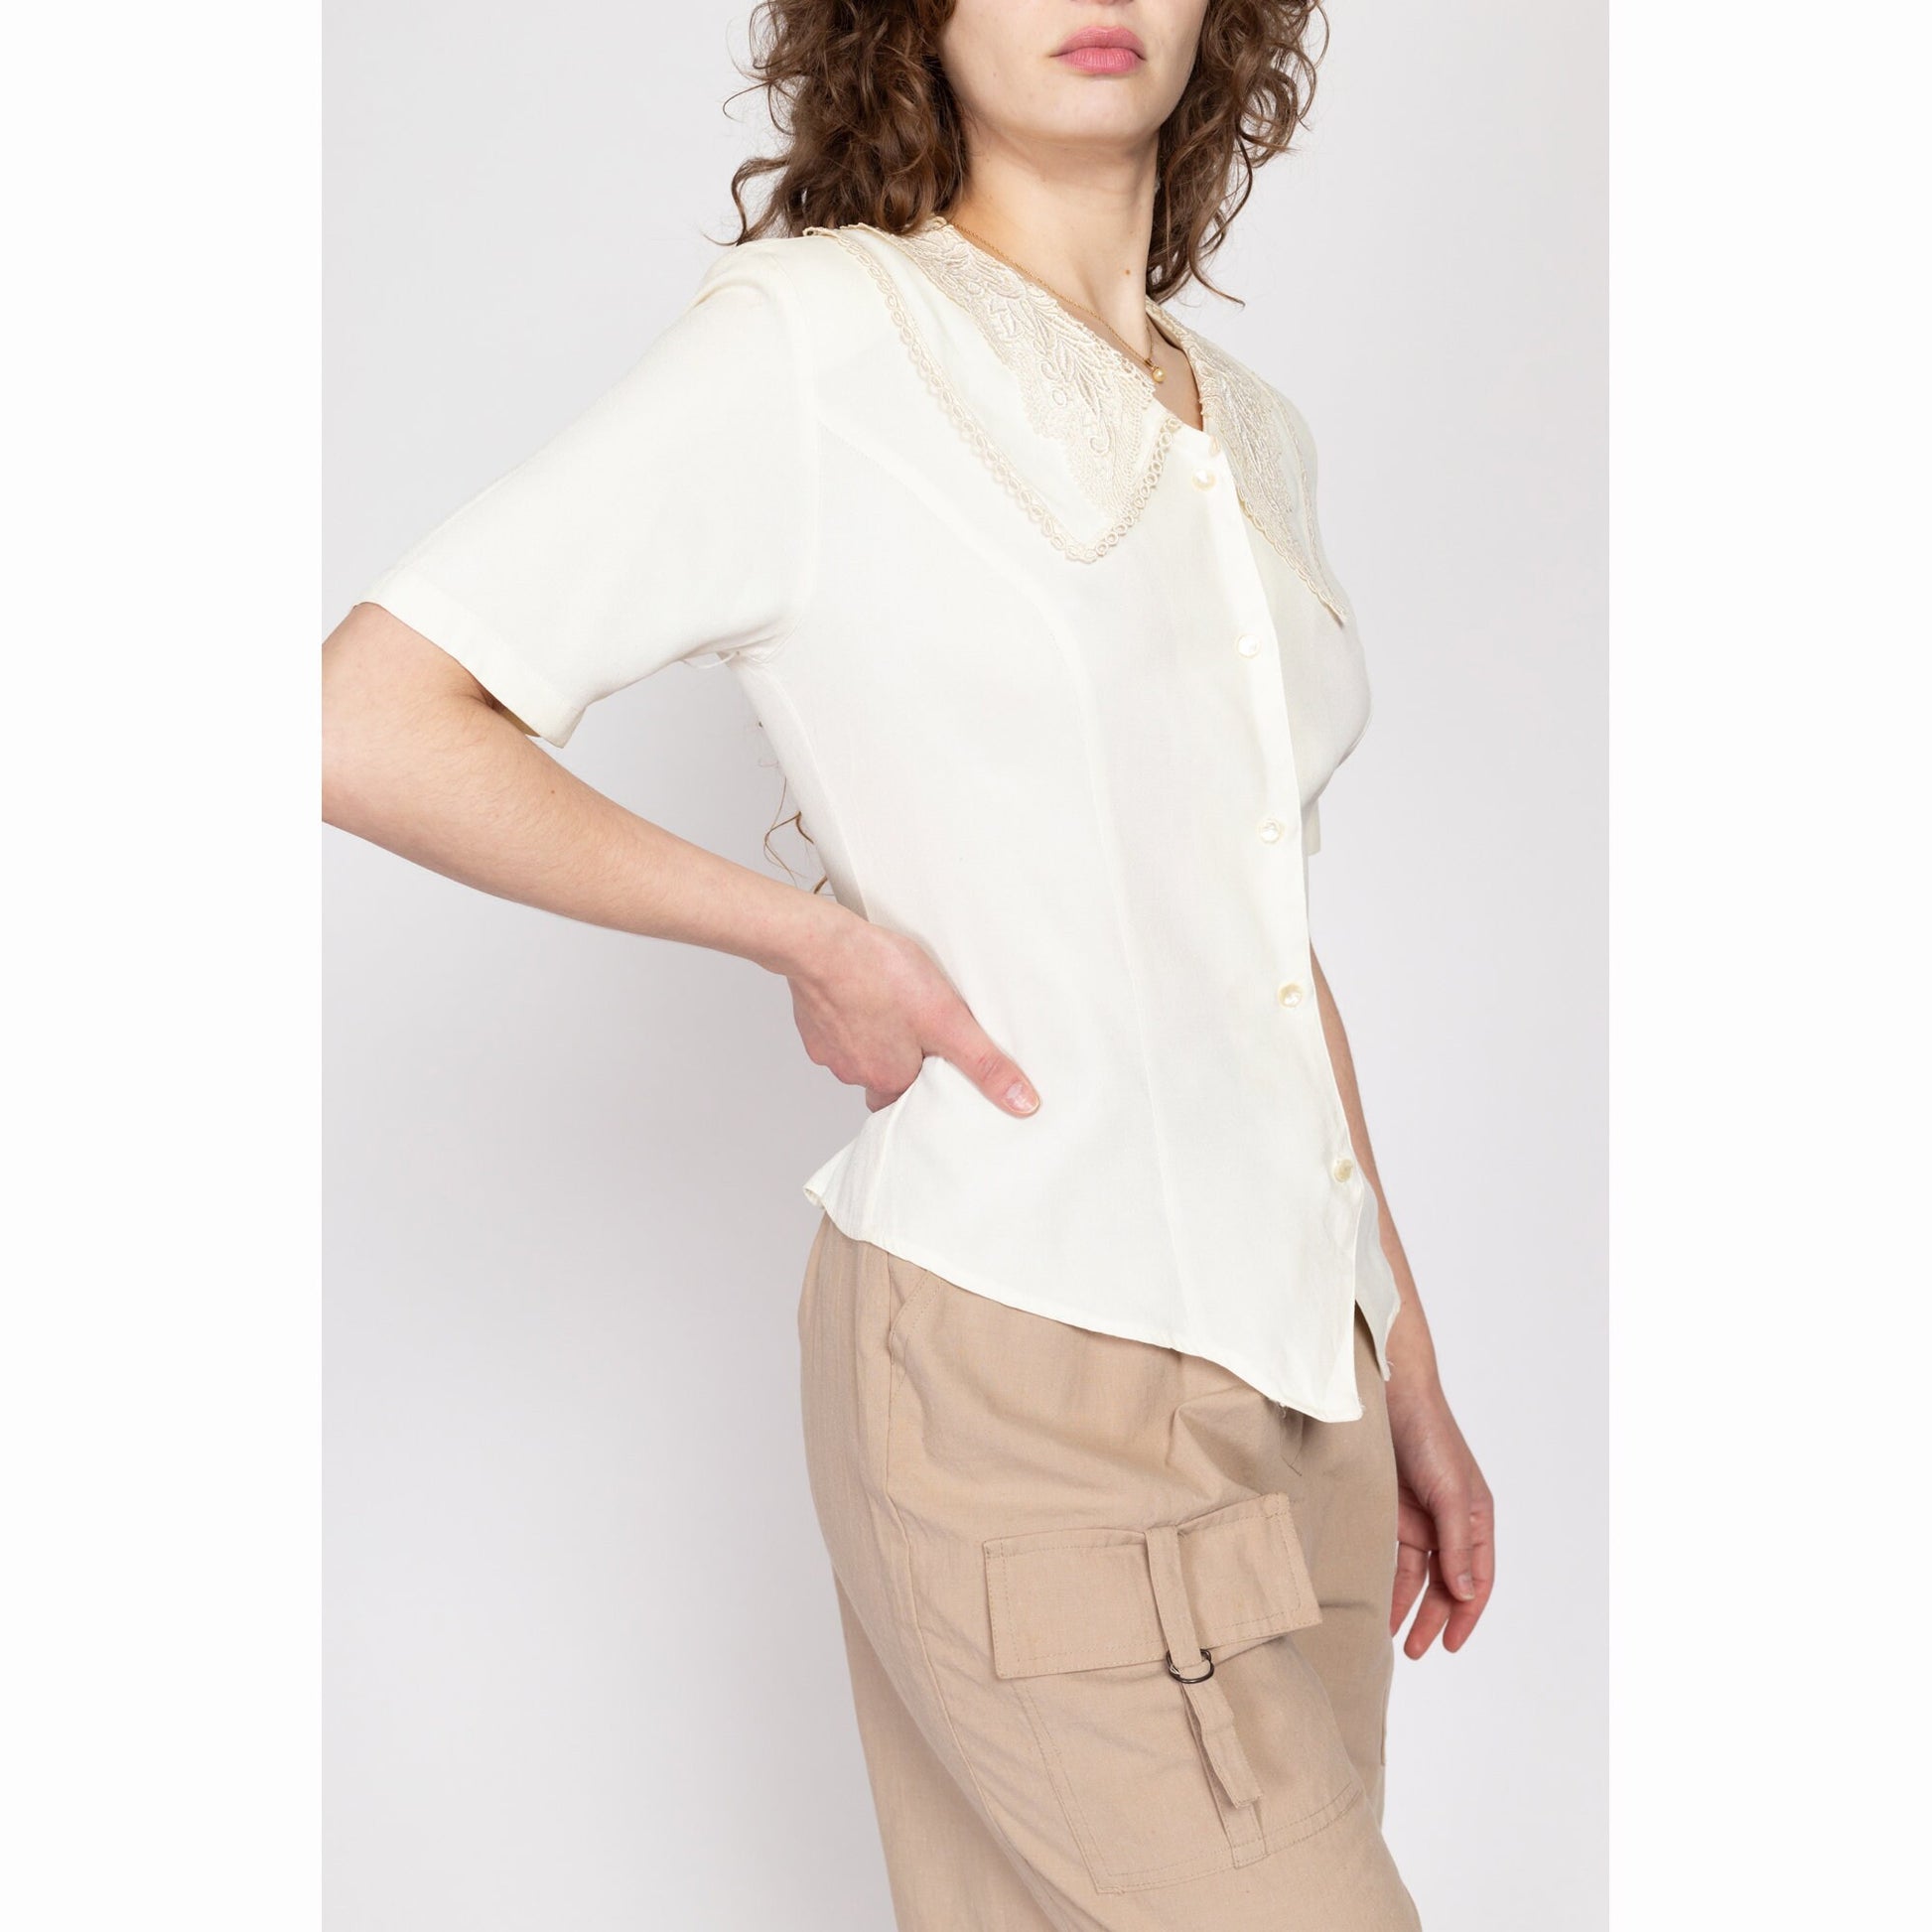 Medium 80s Ivory Lace Chelsea Collar Blouse | Boho Vintage Short Sleeve Button Up Secretary Top